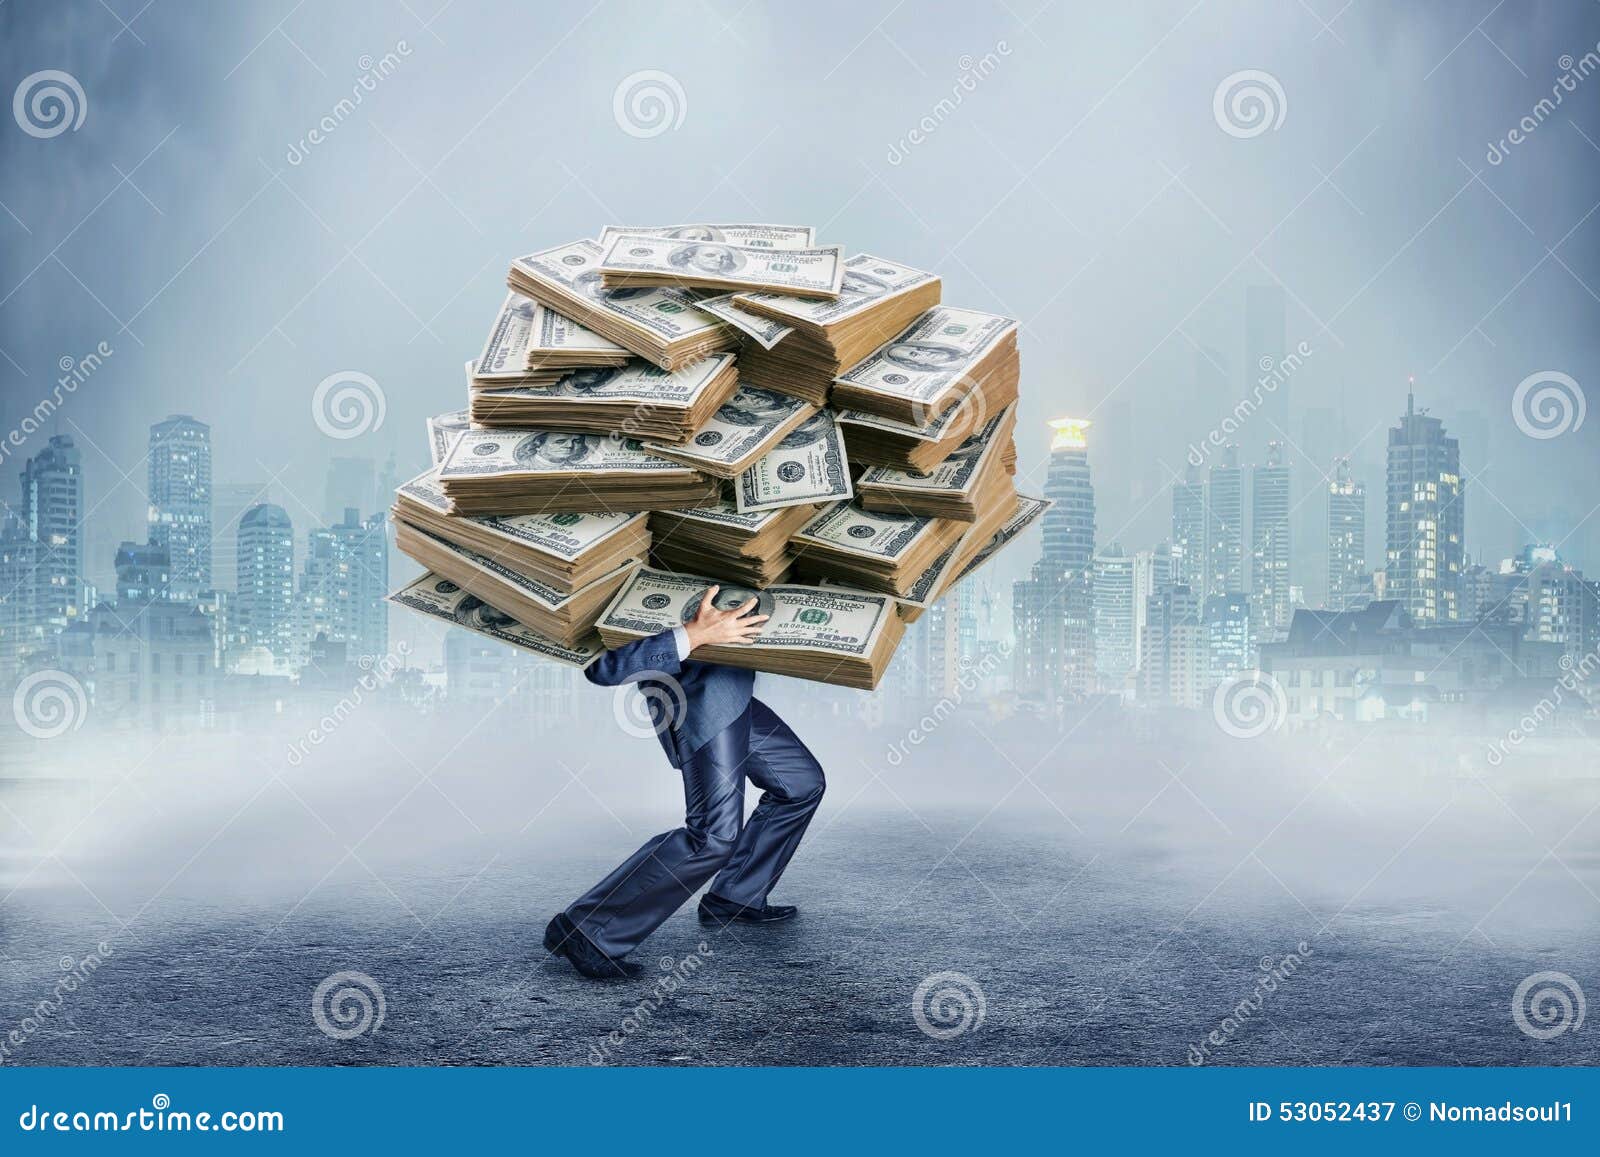 Businessman With Huge Amount Of Money Stock Image Image Of Lifestyle Dream